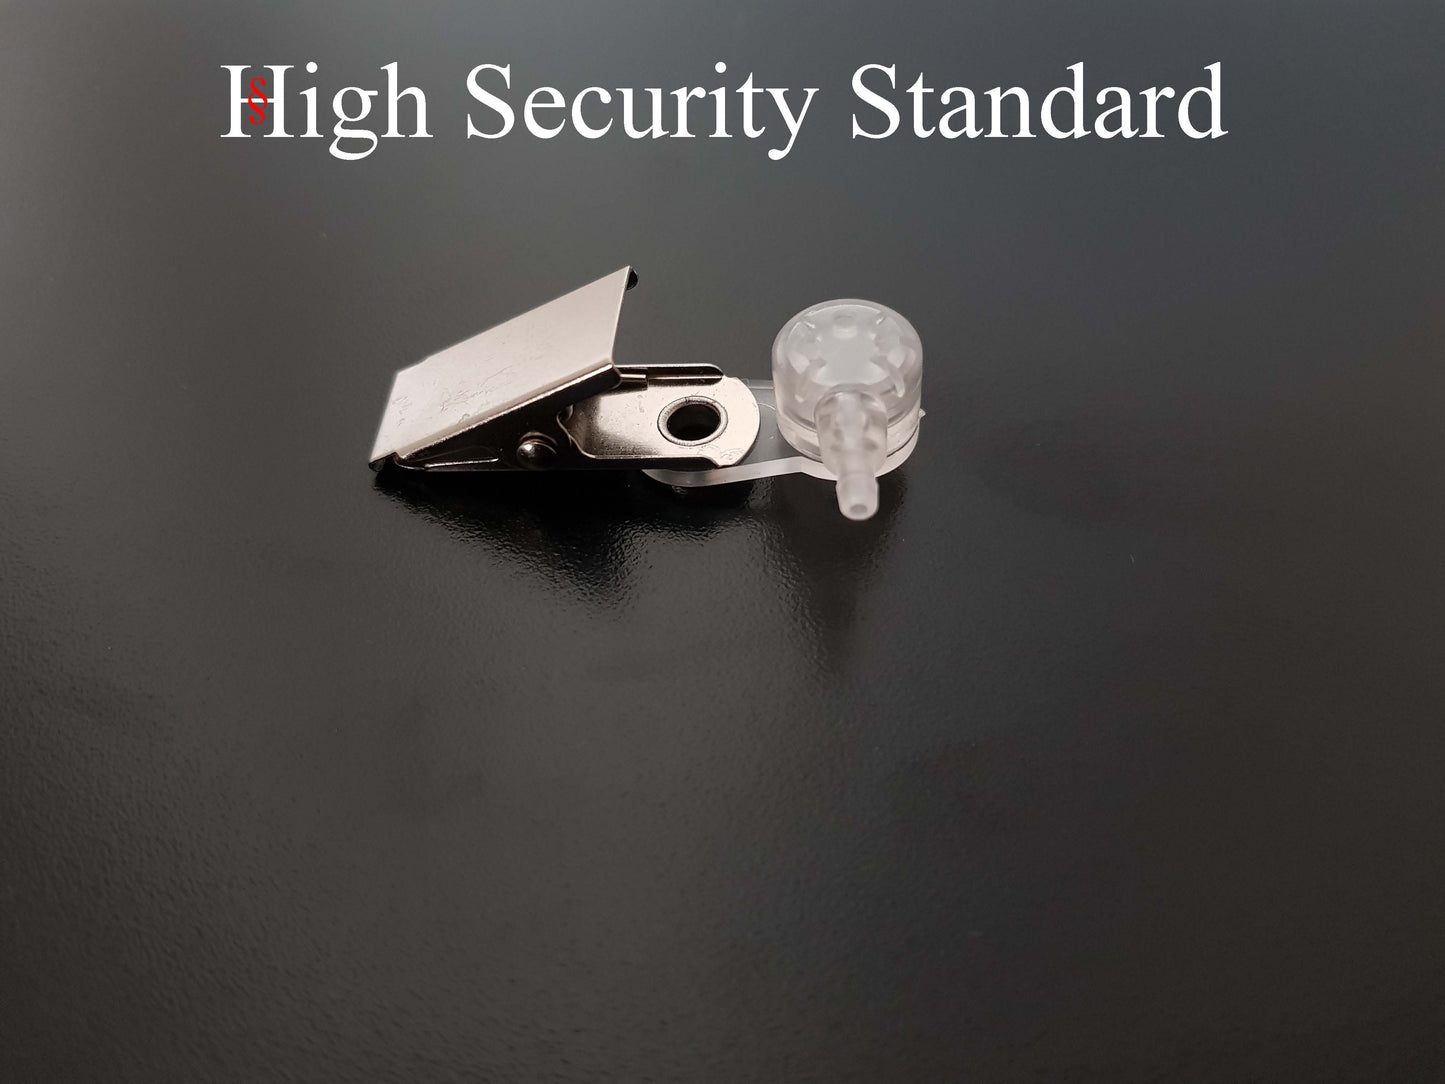 Security Headset 2Pin für Kenwood, Baofeng, Pofung